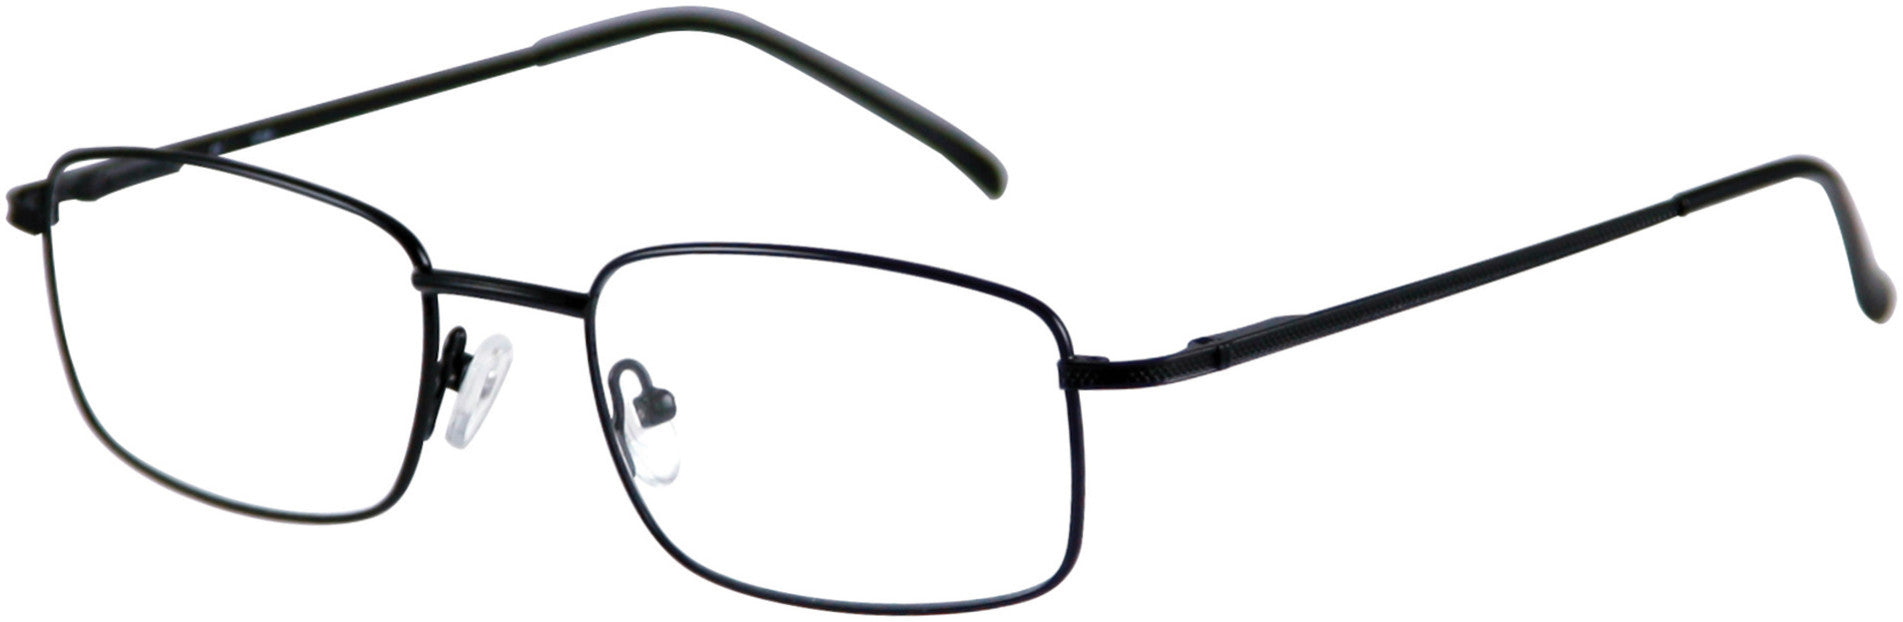 Viva VV0260 Eyeglasses B84-B84 - Black